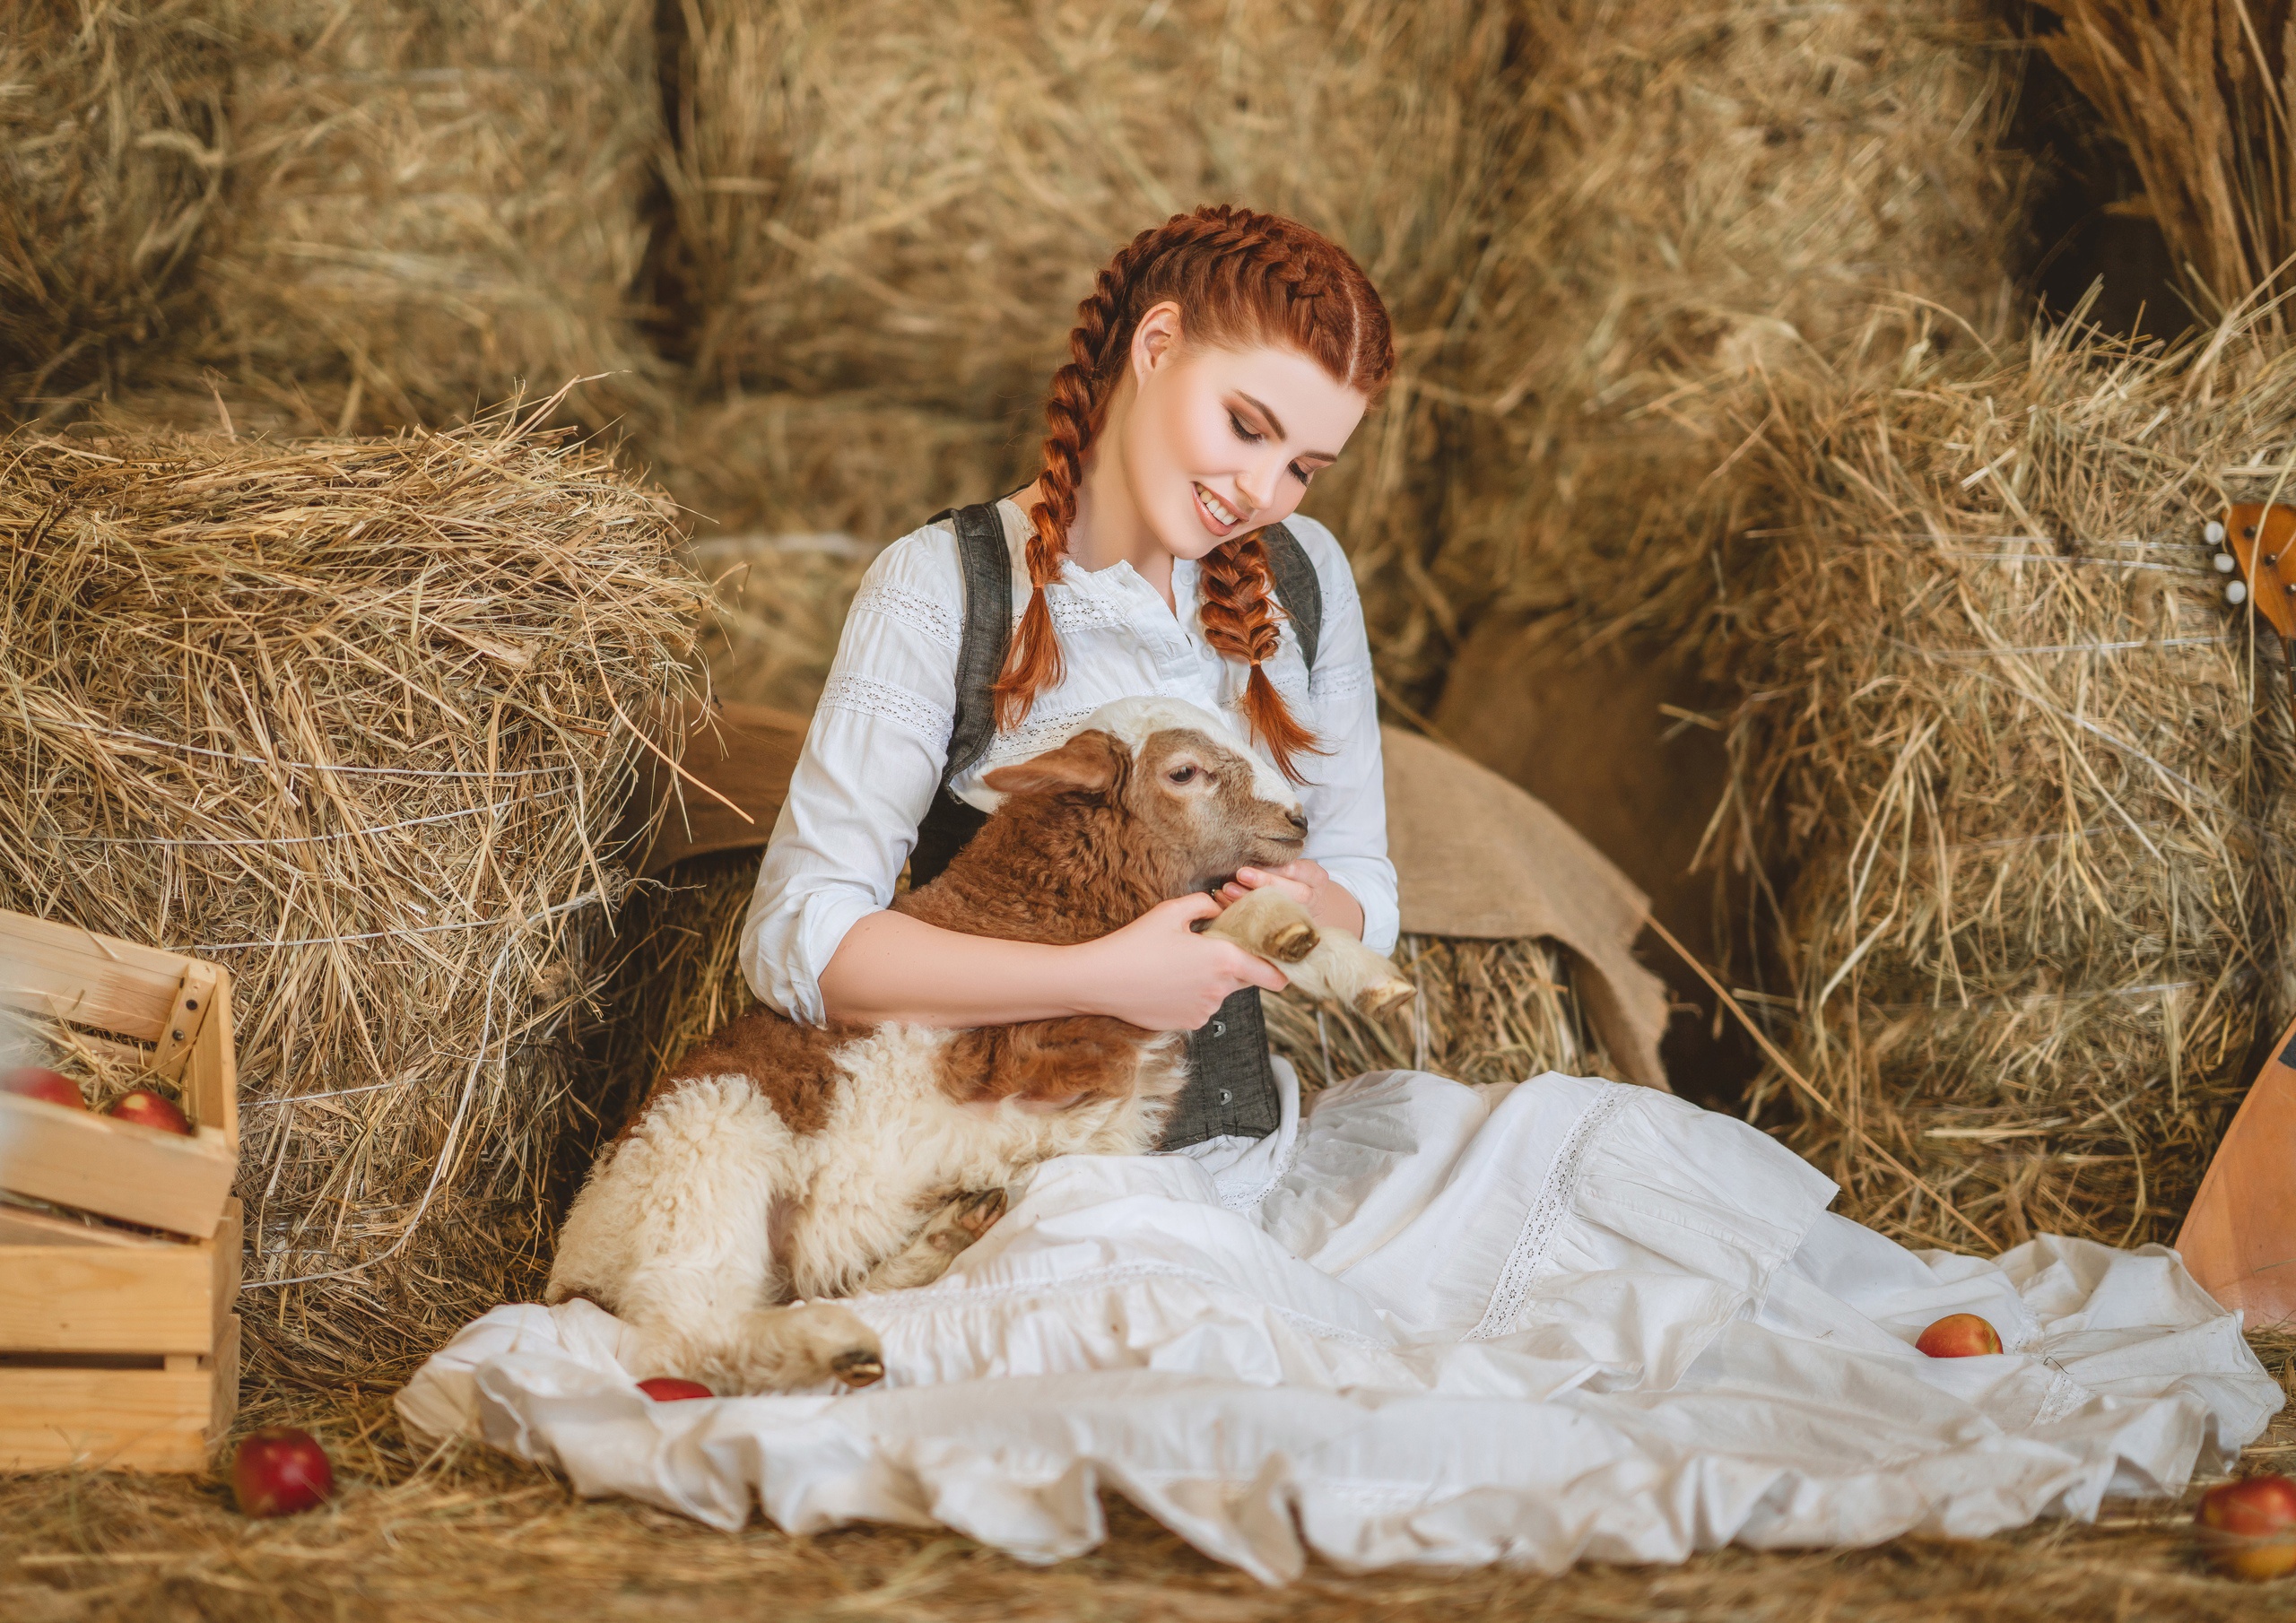 Барана сена. Девушка Овечка. Девушка на сене. Девушка с овечкой на руках. Рыжая девушка на сене.